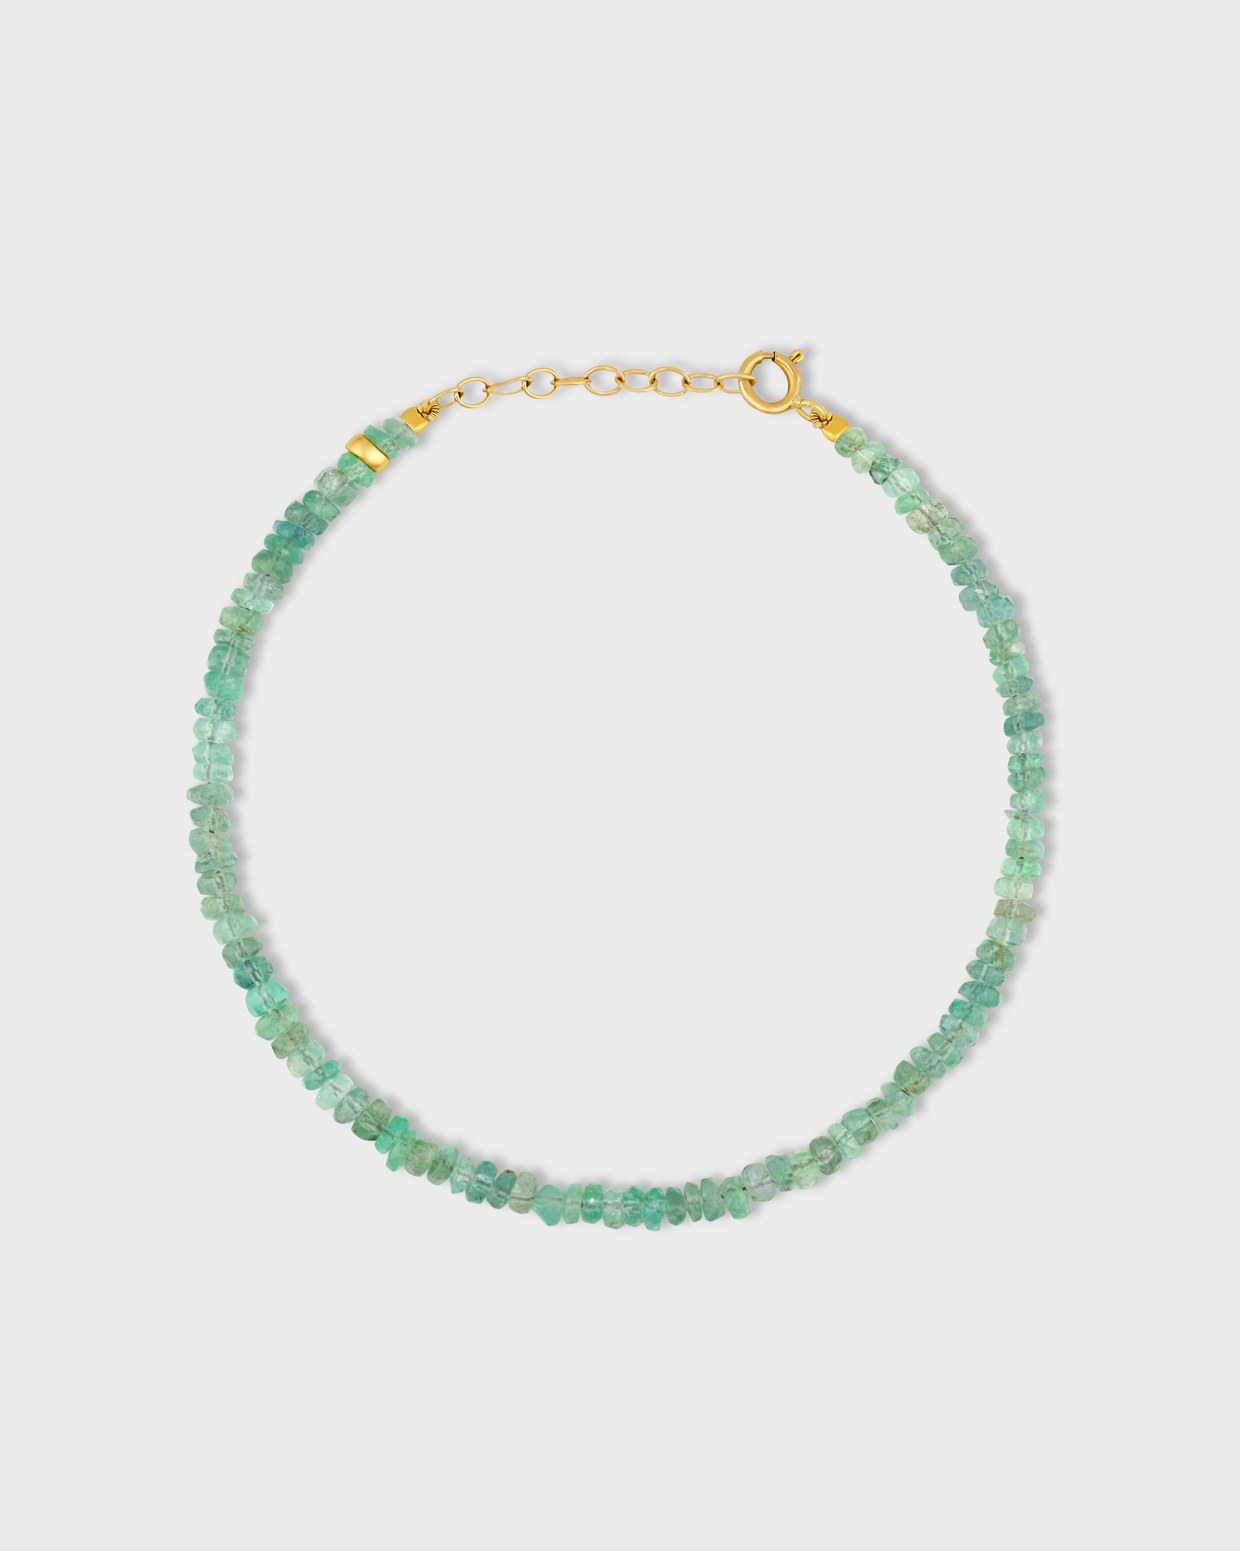 Birthstone May Emerald Bracelet